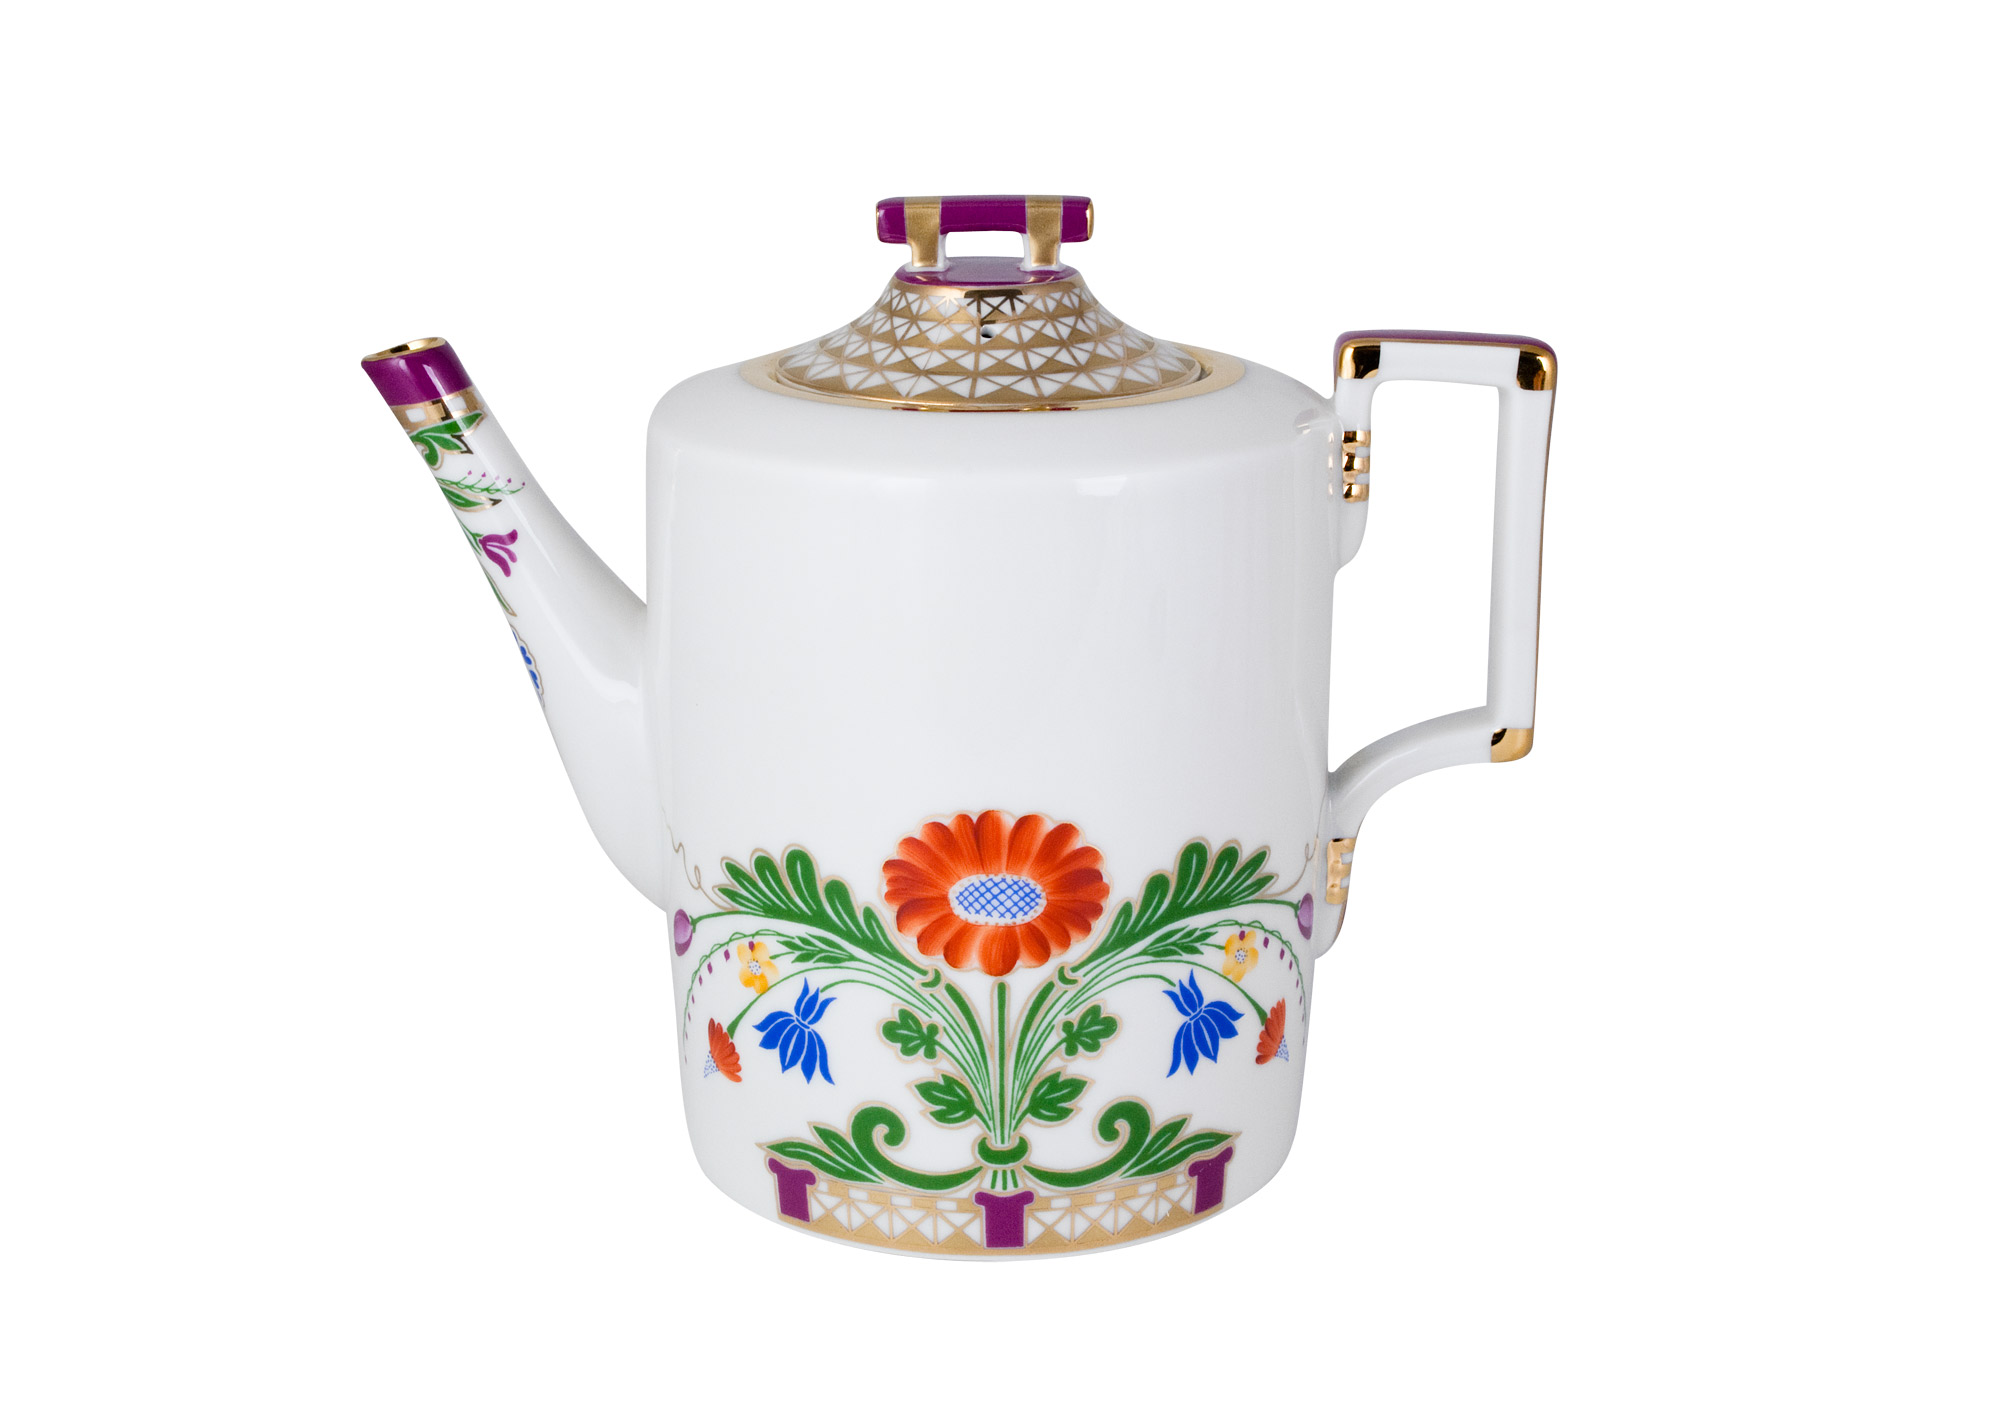 Buy Moscow River Flowers Porcelain Teapot at GoldenCockerel.com